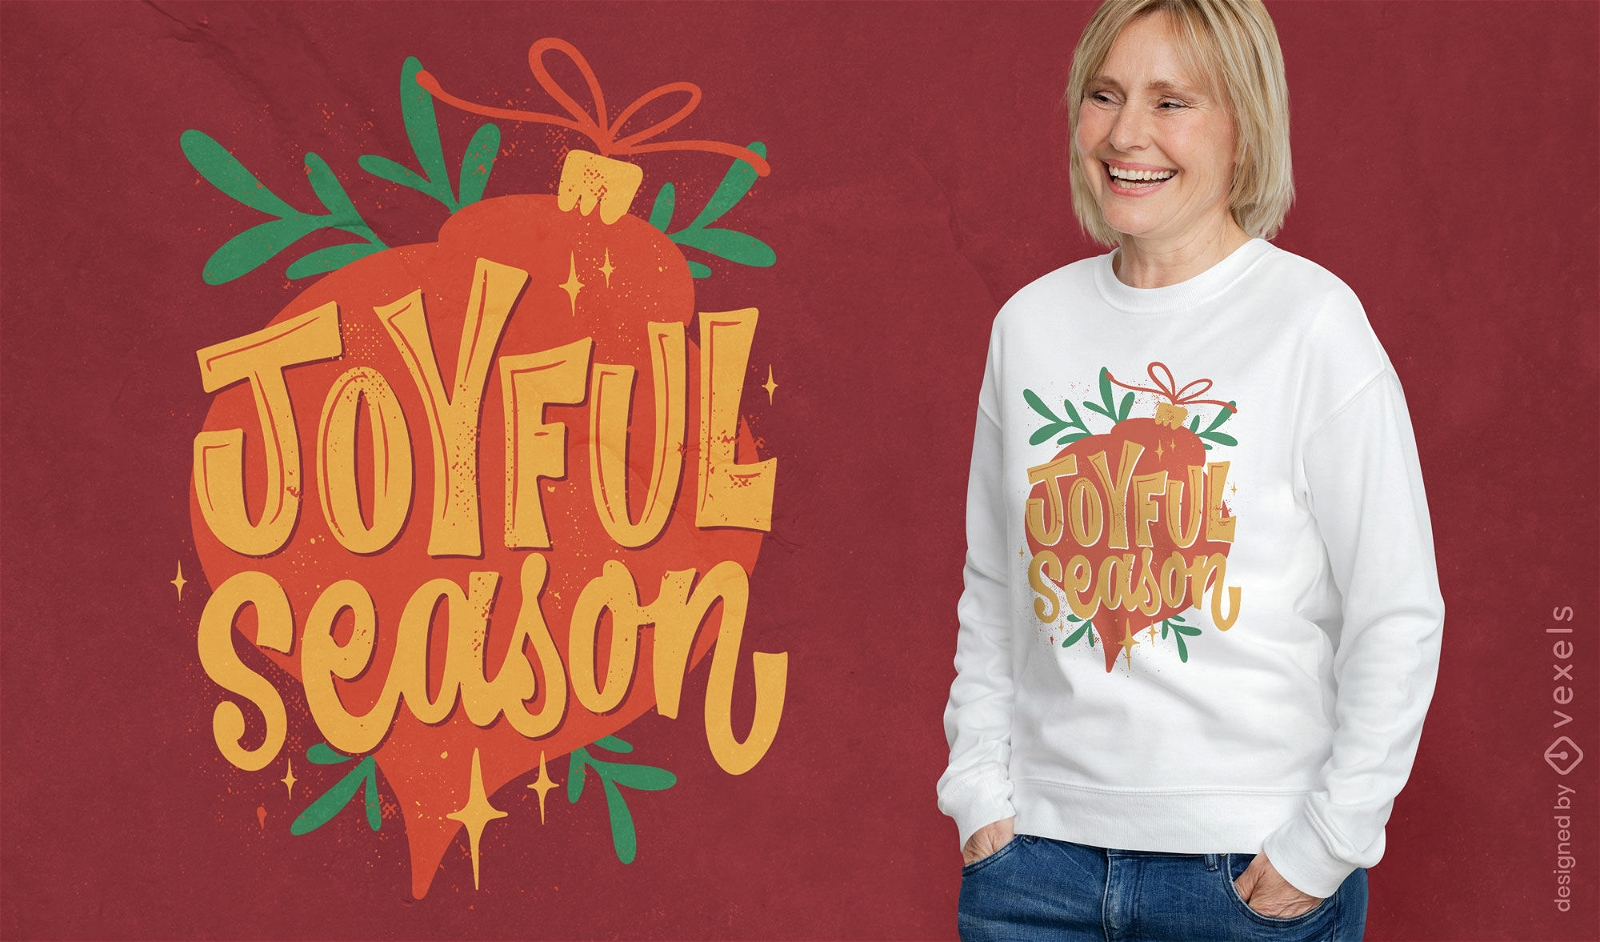 Joyful season Christmas t-shirt design